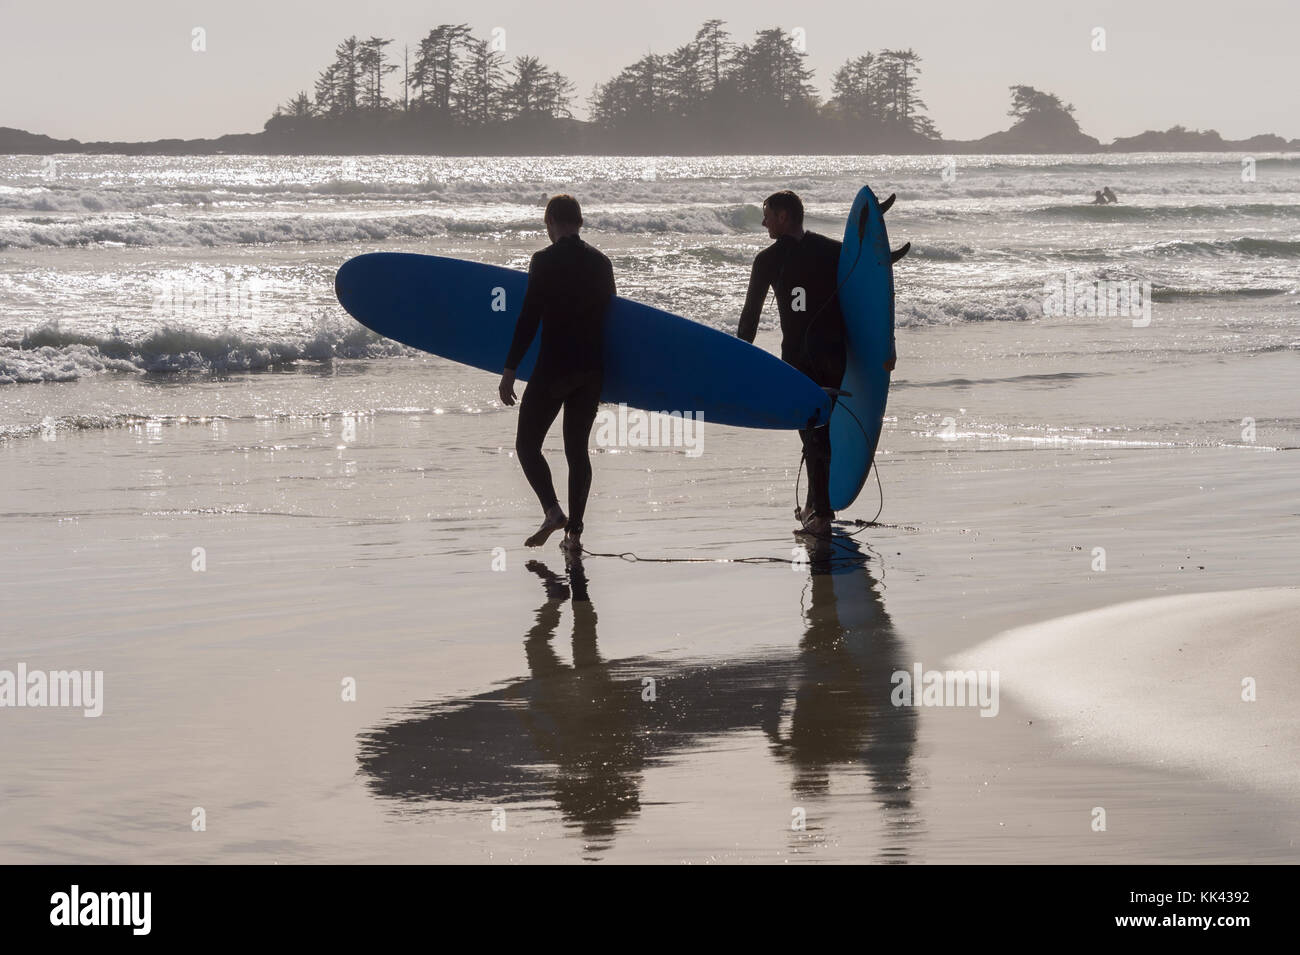 Surfers on Chesterman beach near Tofino, BC, Canada (September 2017) Stock Photo